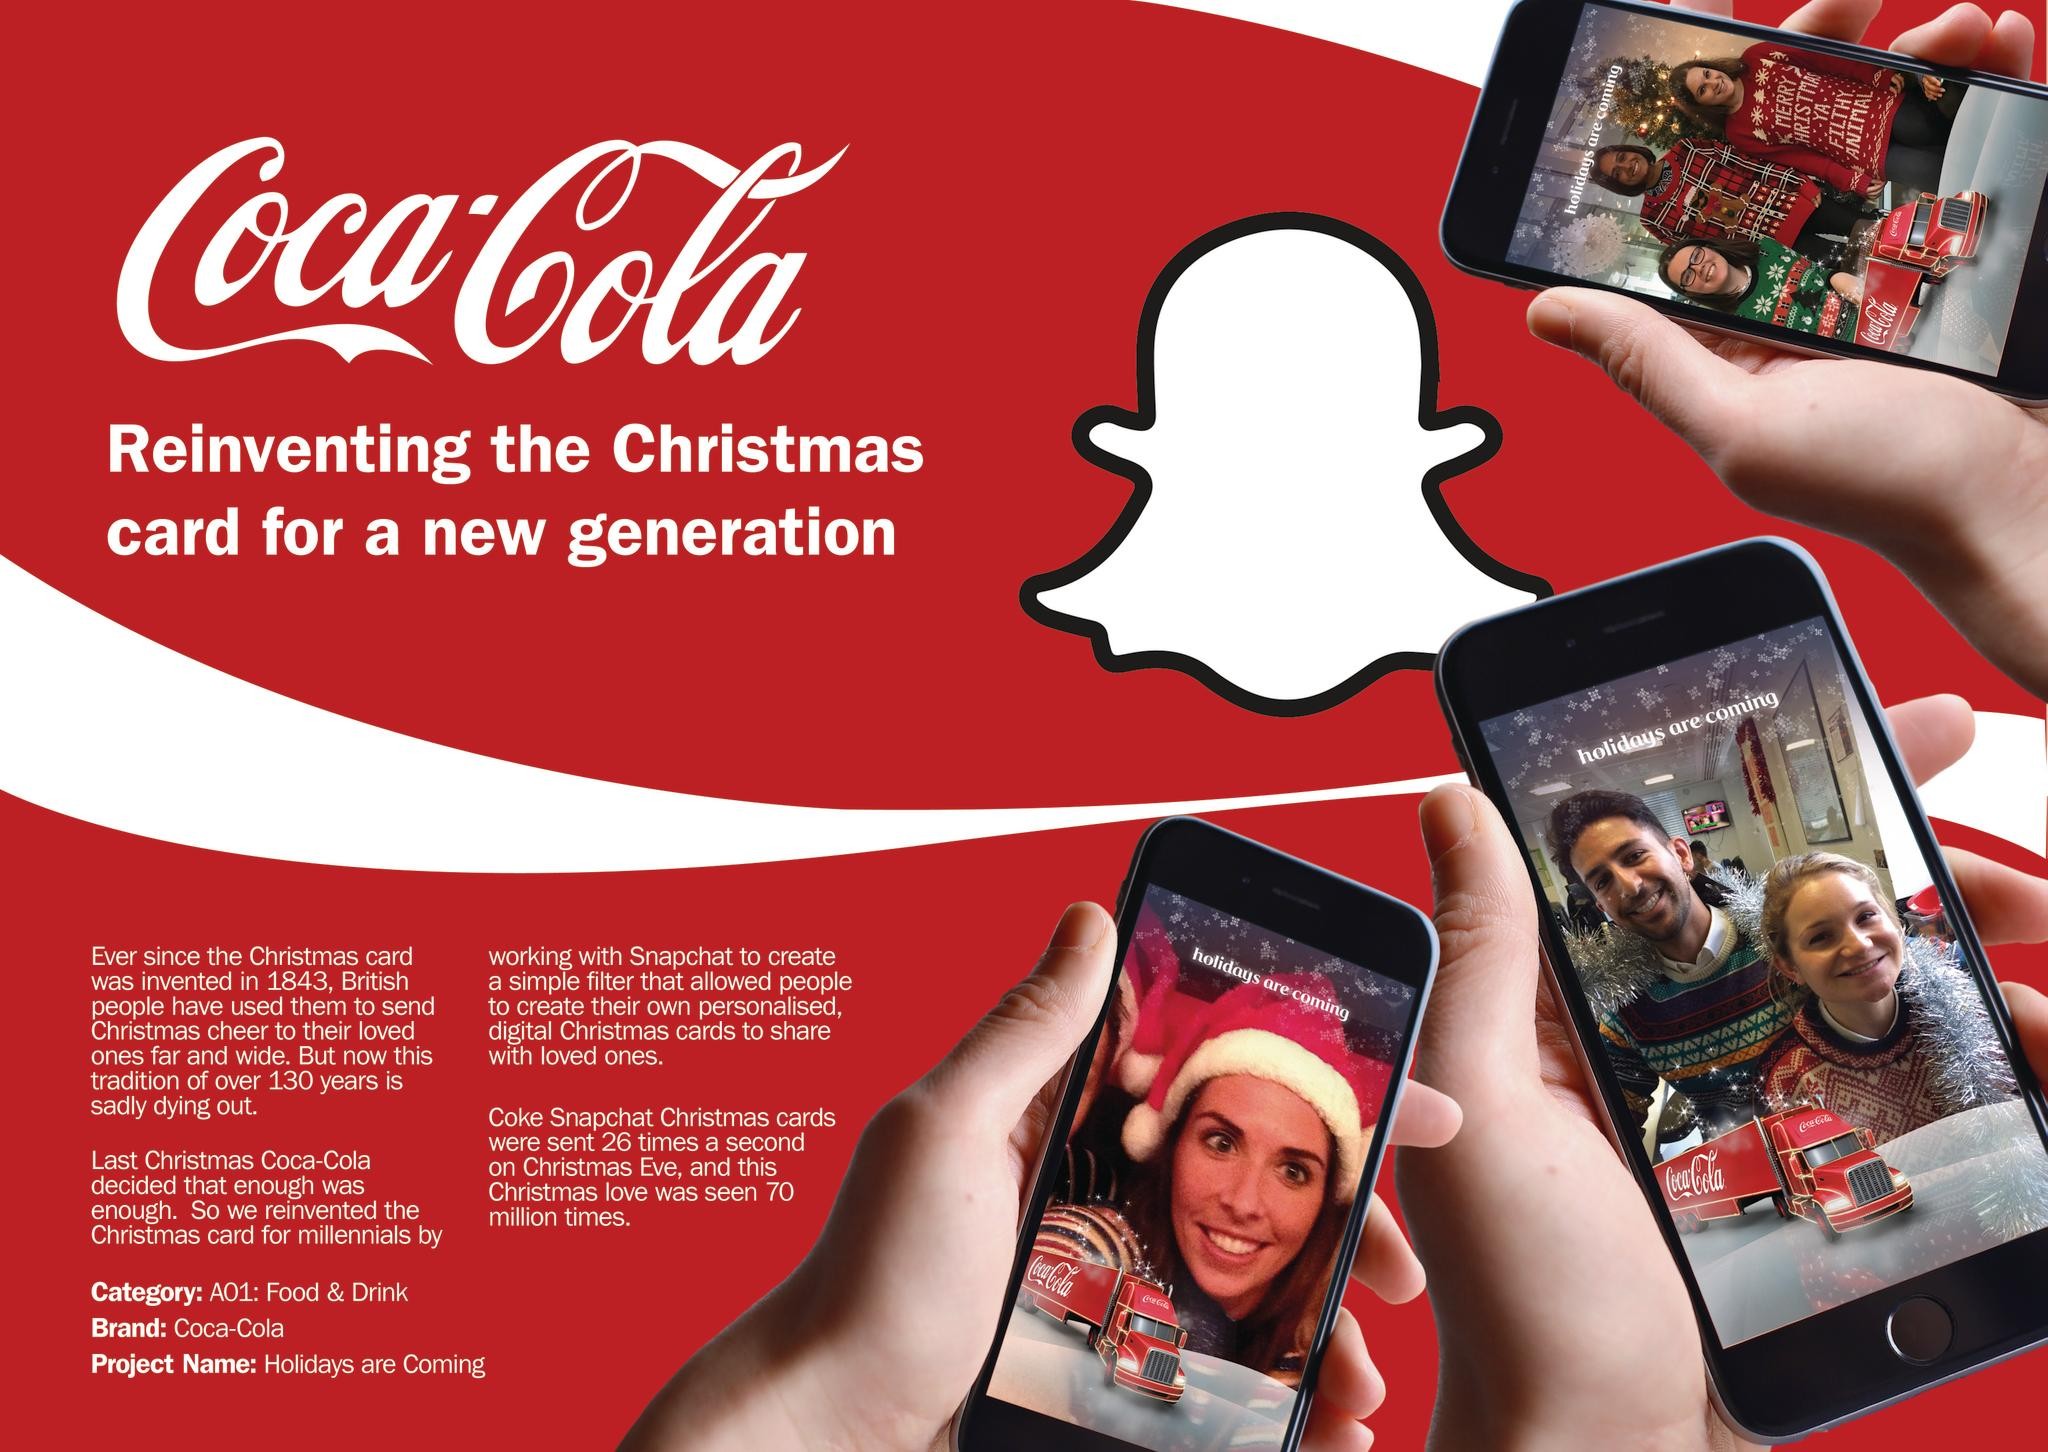 The Coca-Cola Christmas Card